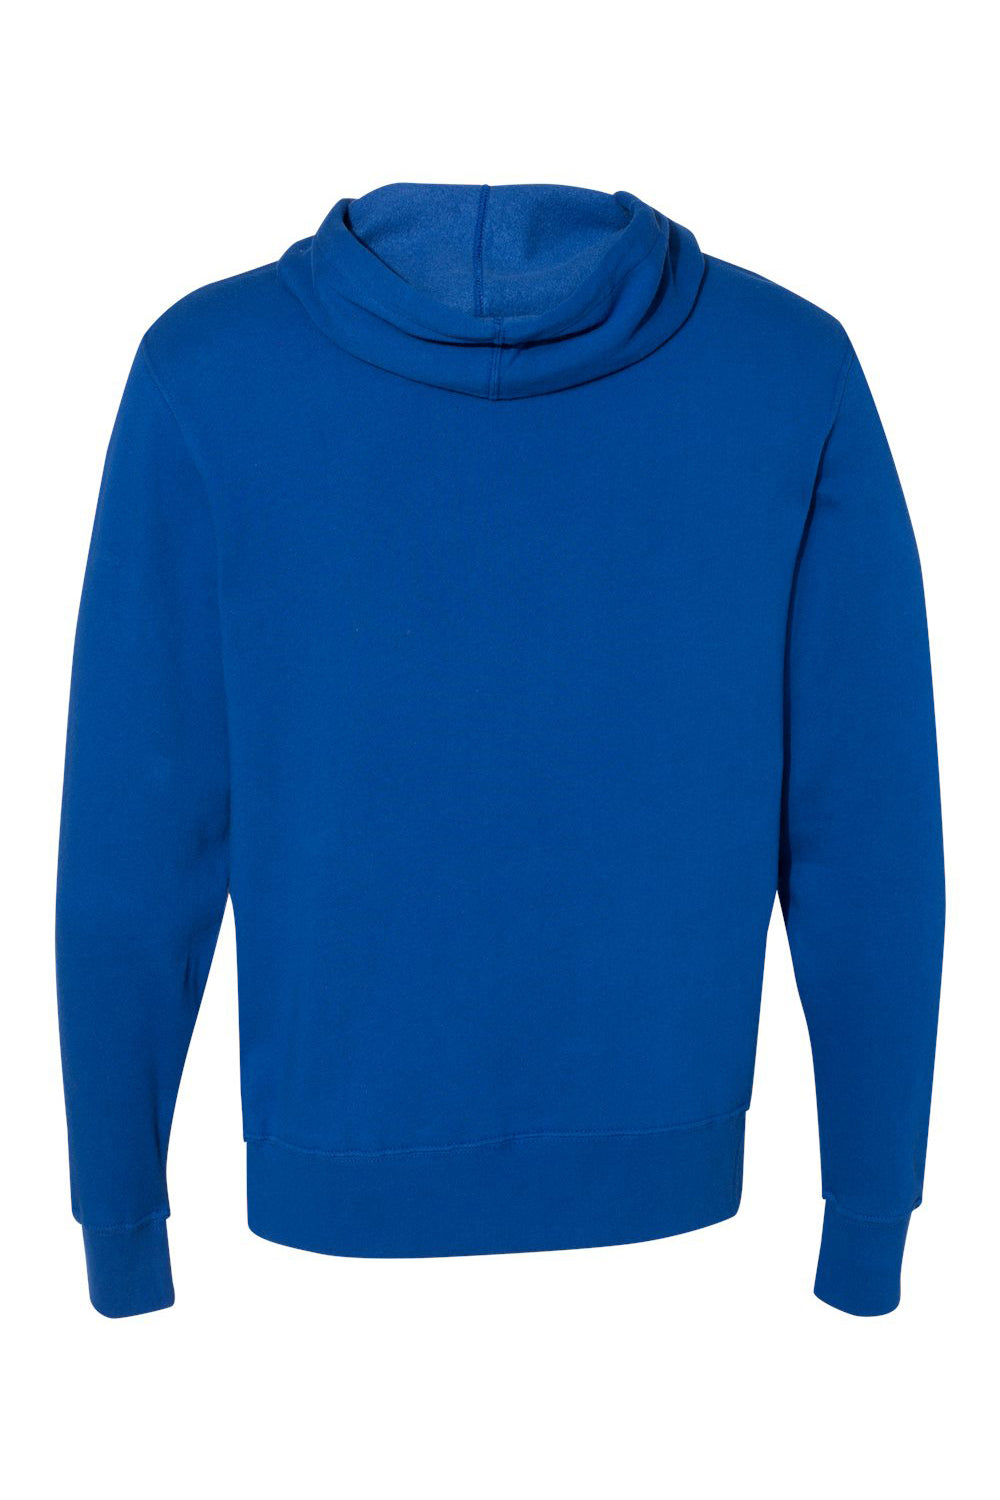 Independent Trading Co. AFX90UN Mens Hooded Sweatshirt Hoodie Cobalt Blue Flat Back